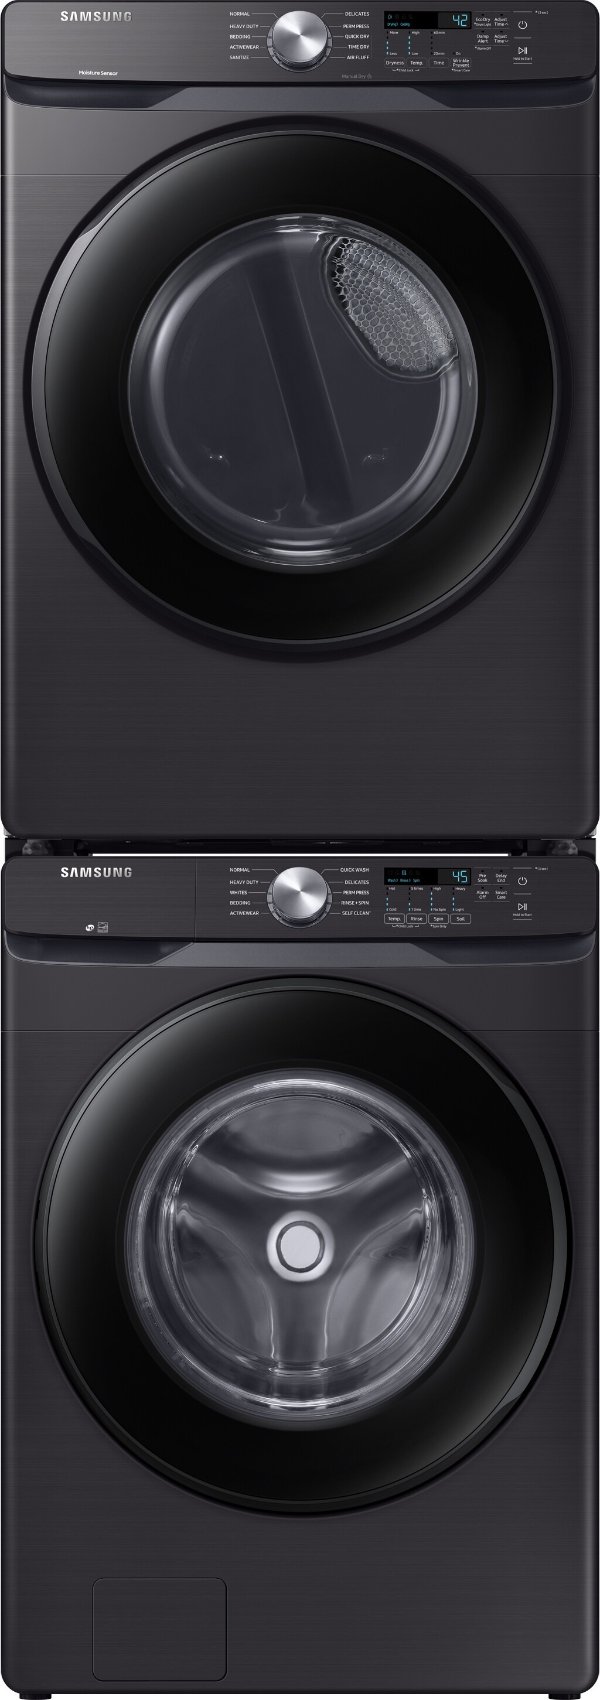 Samsung 洗衣机烘干机组合